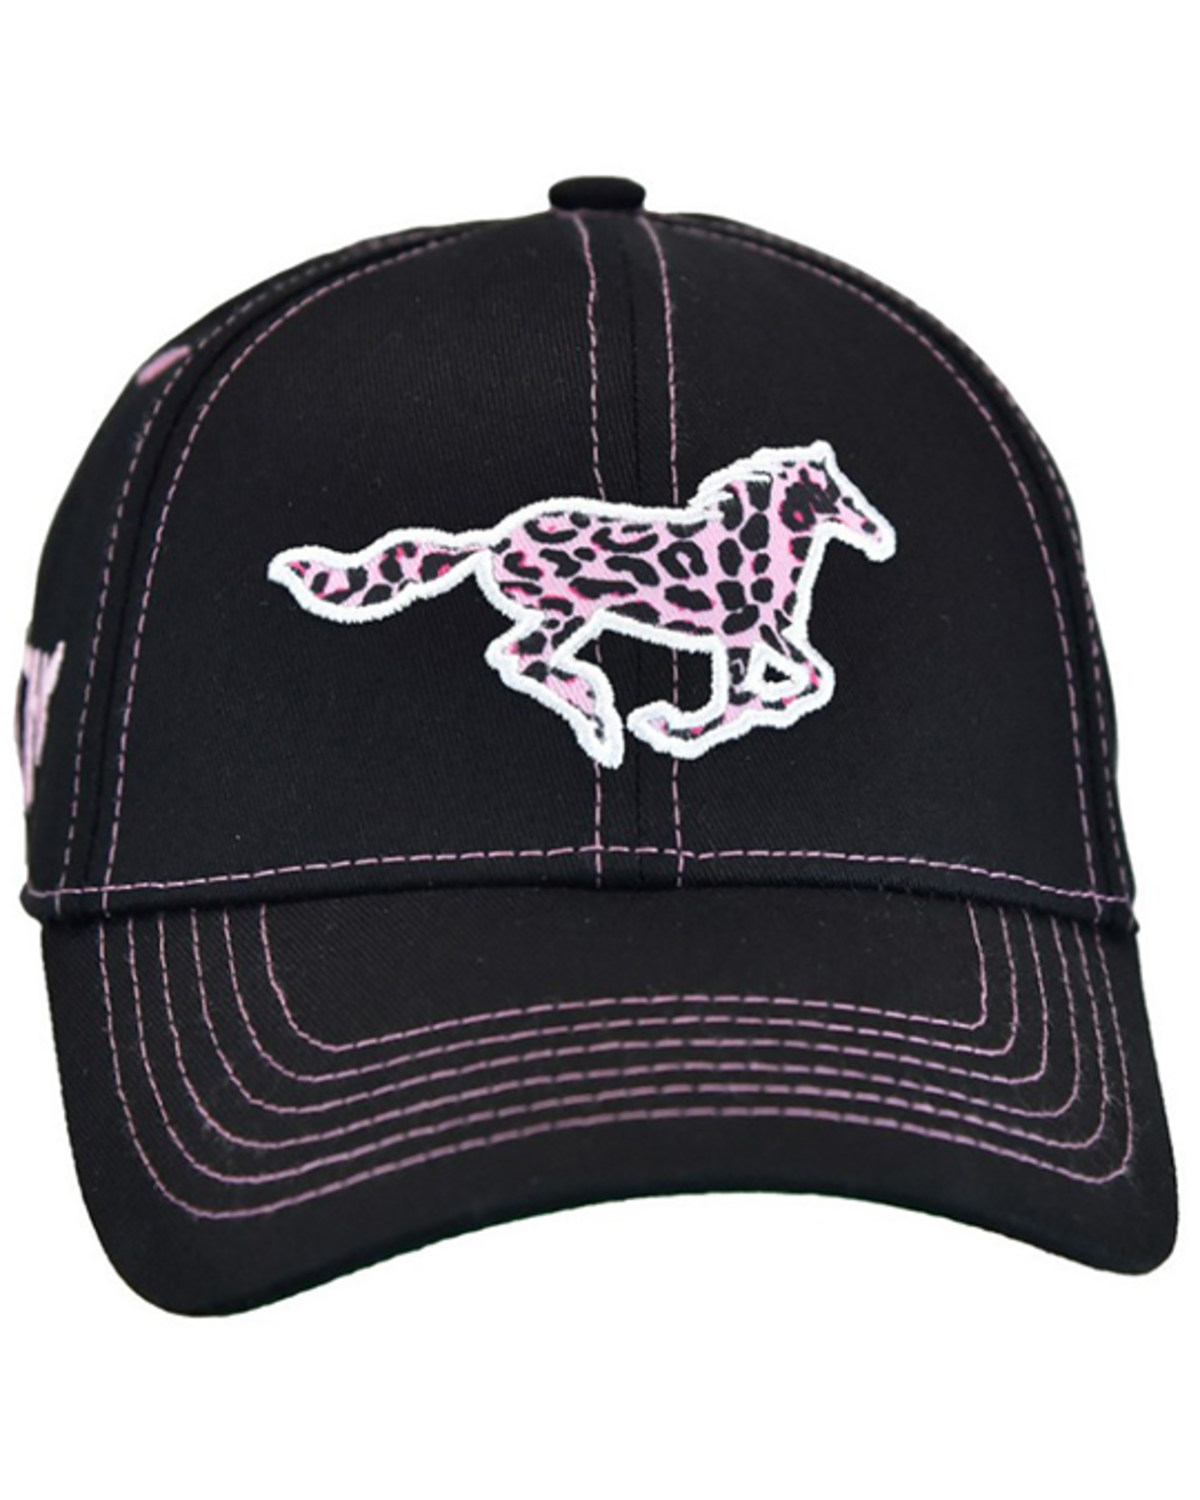 Cowgirl Hardware Girls' Leopard Pony Baseball Cap